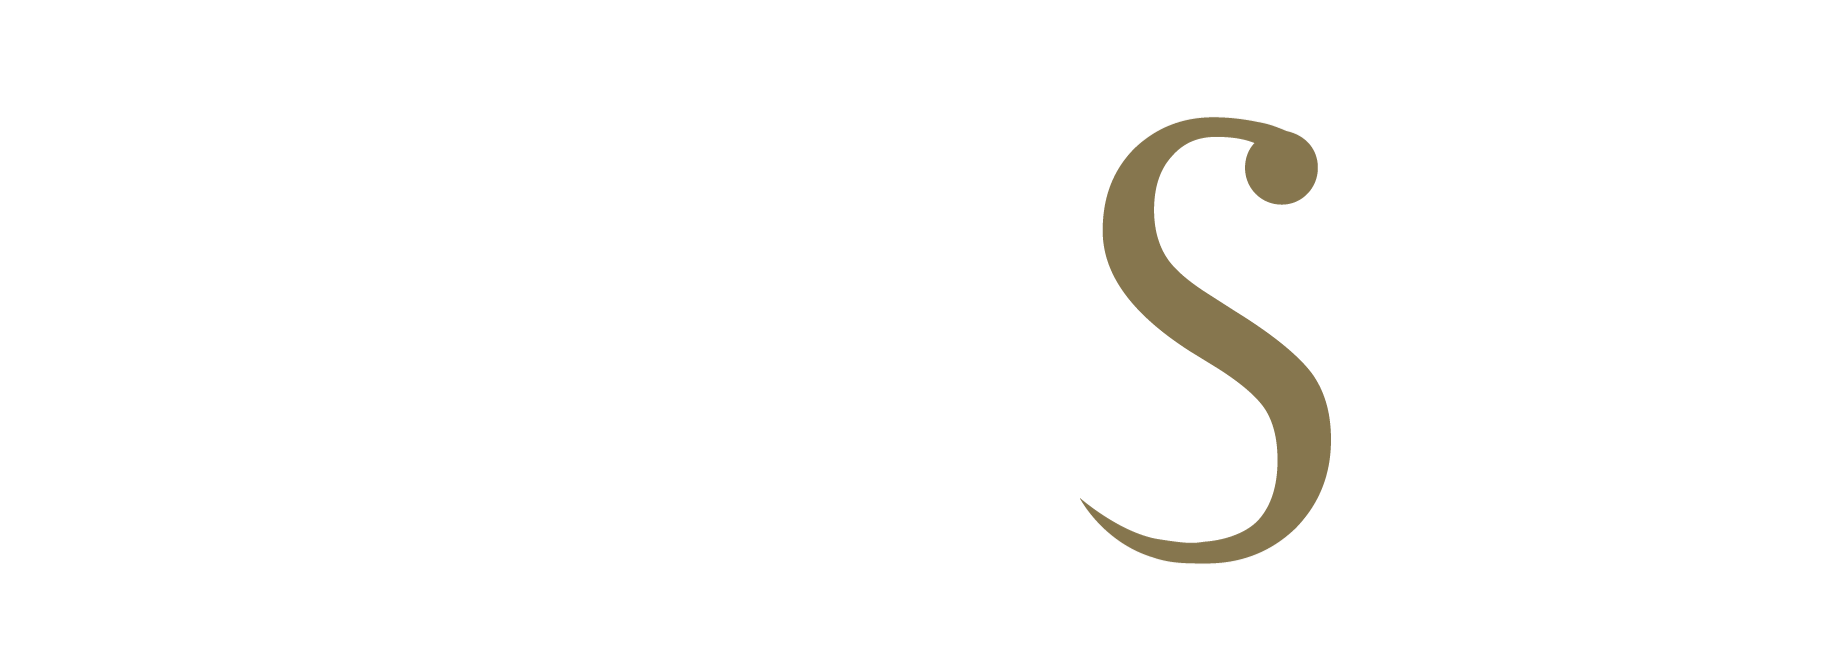 IVS logo